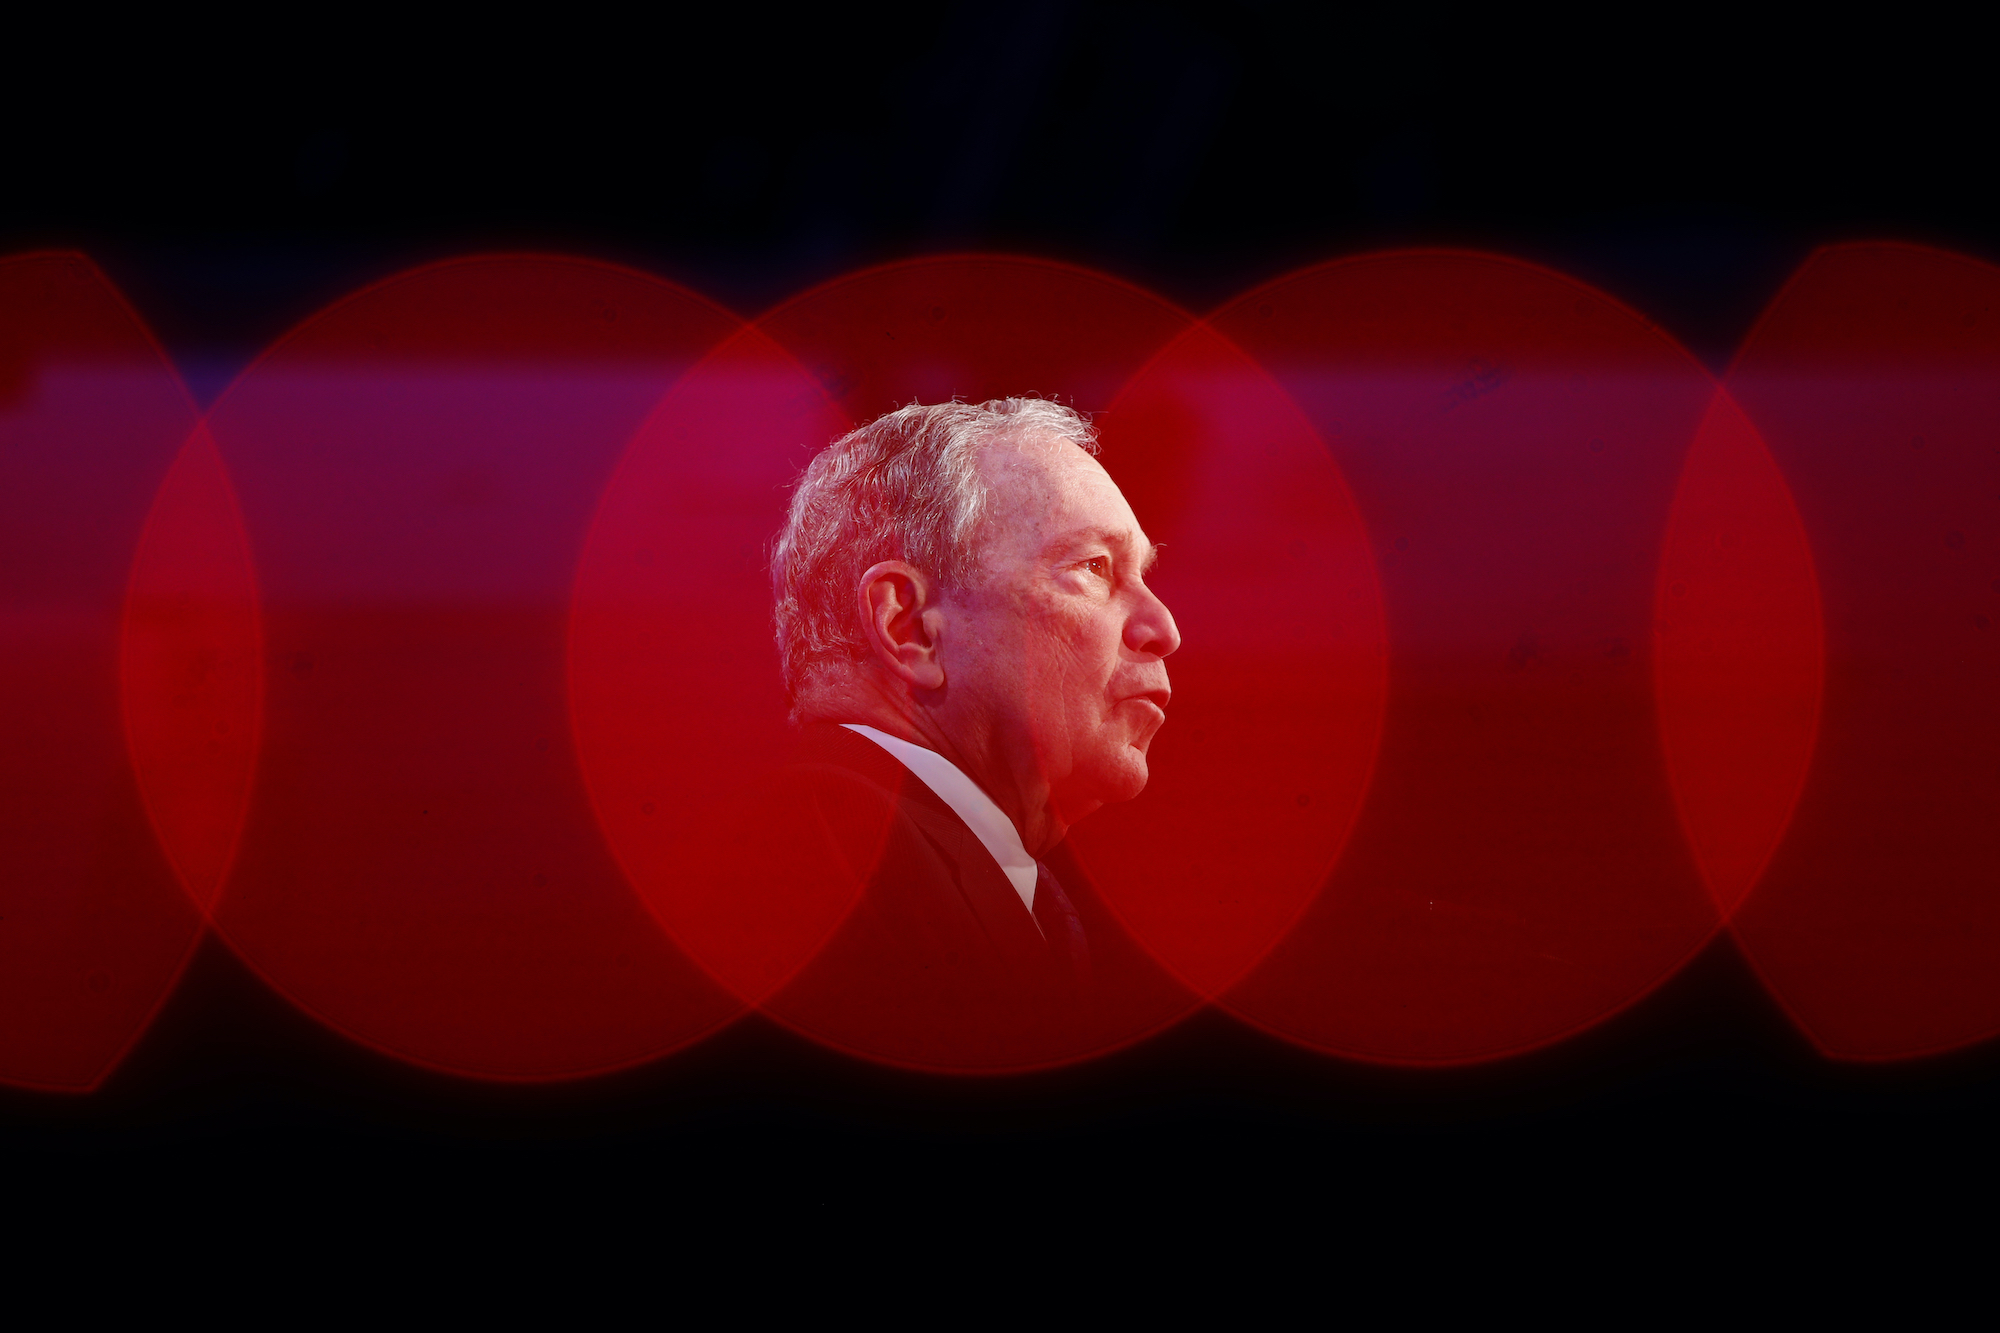 Profile image of Michael Bloomberg